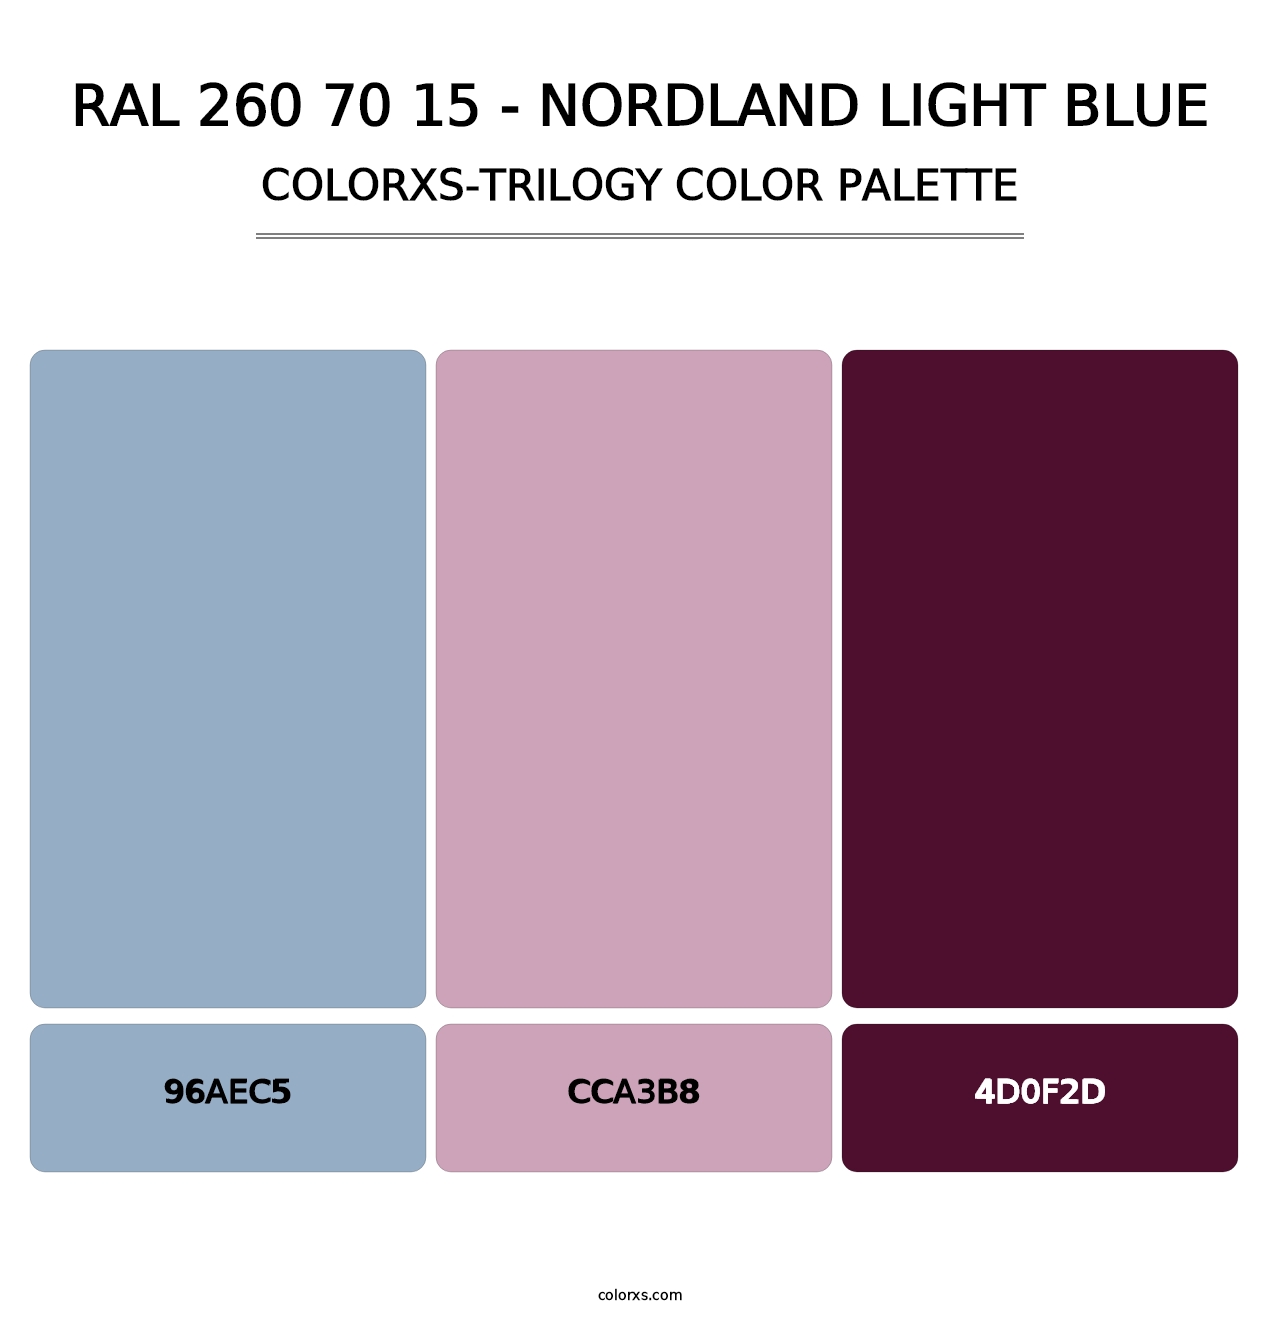 RAL 260 70 15 - Nordland Light Blue - Colorxs Trilogy Palette